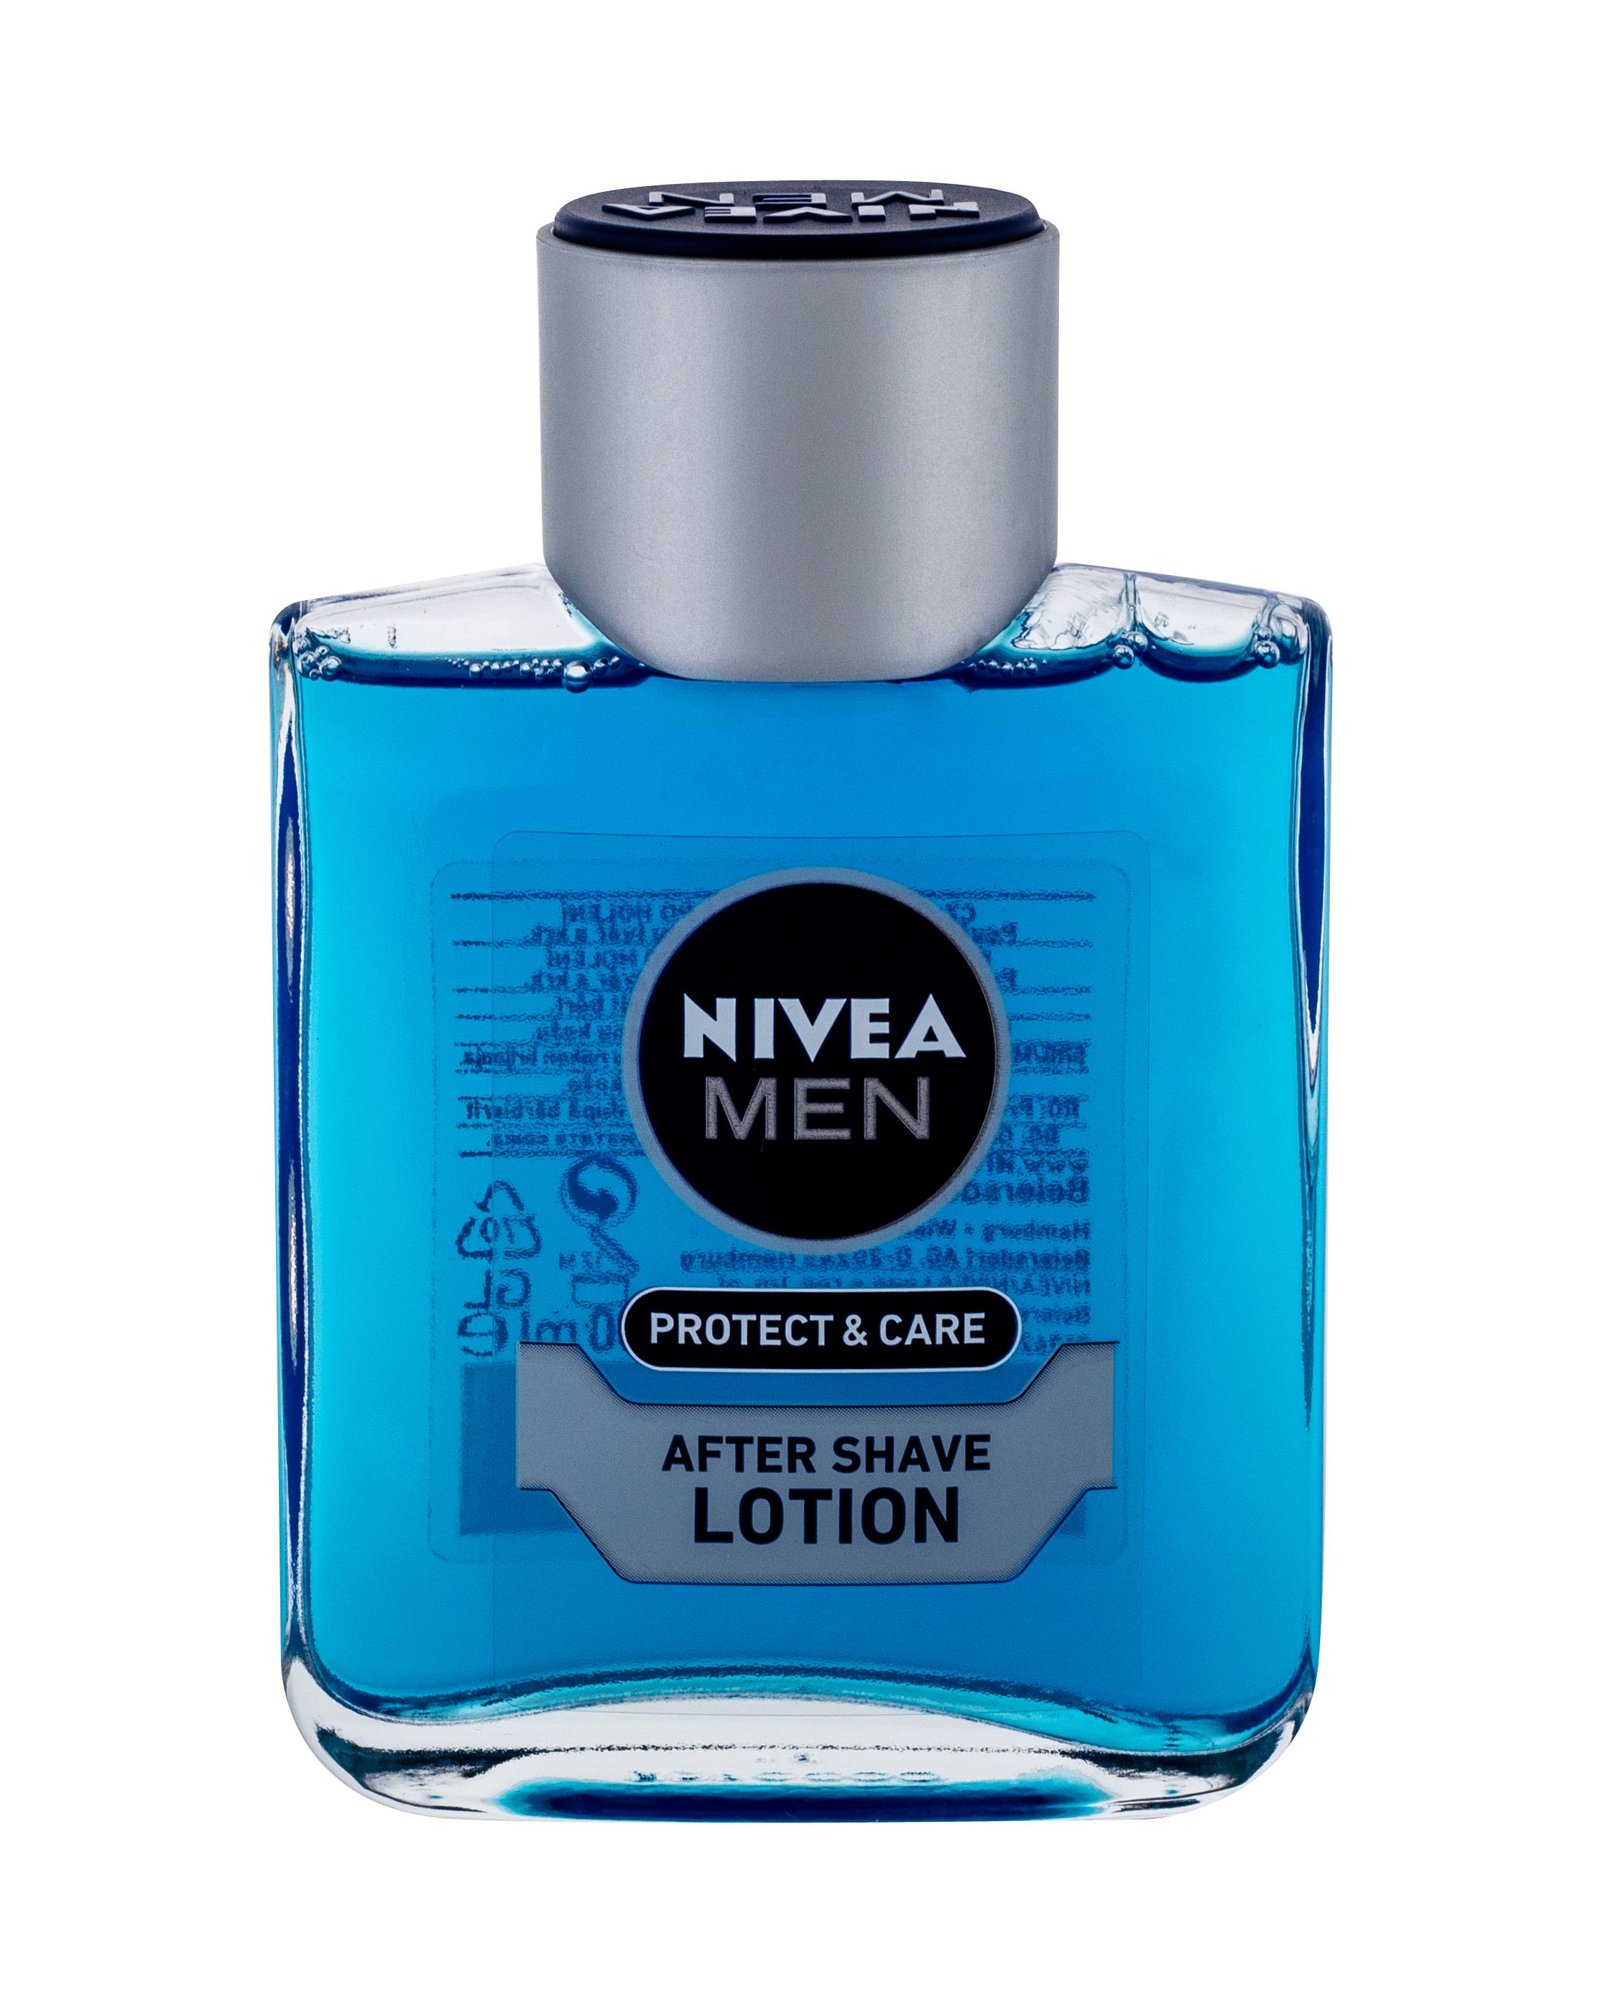 Nivea Men Original Mild After Shave Lotion vanduo po skutimosi